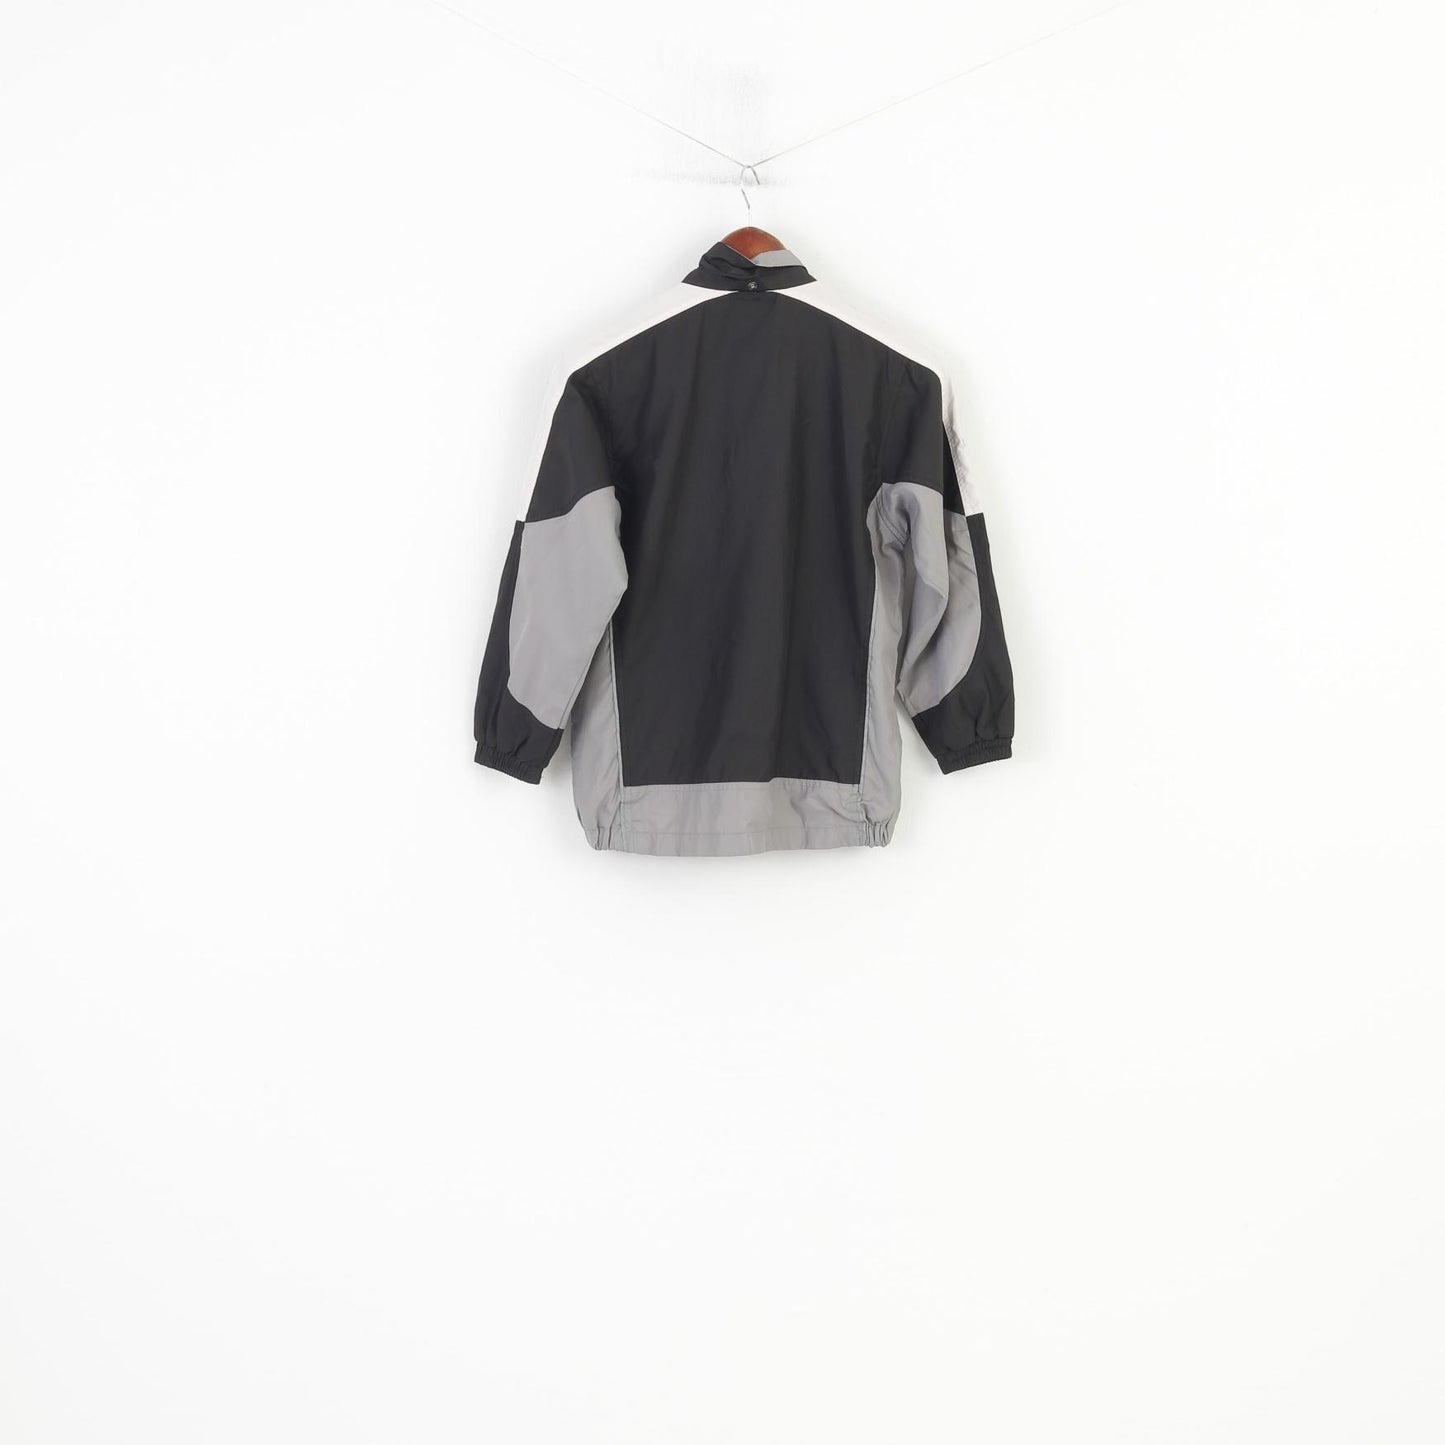 Umbro Boys 140 Jacket Full Zipper Sport Black Grey Outwear Vintage Top